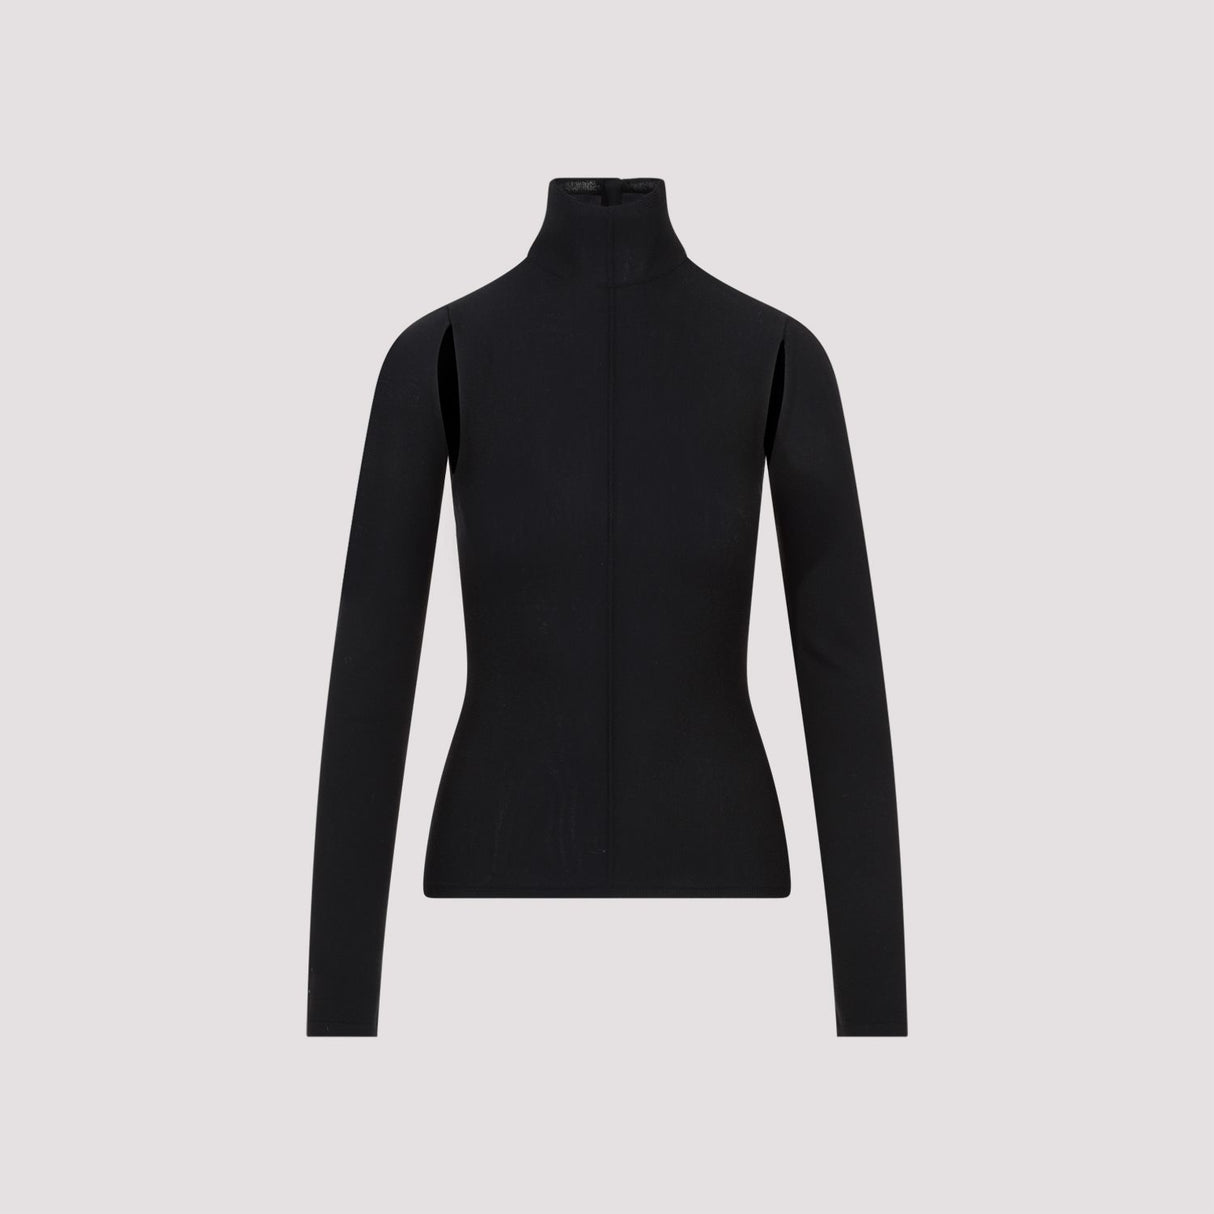 KHAITE Black Merino Wool Cut-Out Turtleneck Sweater